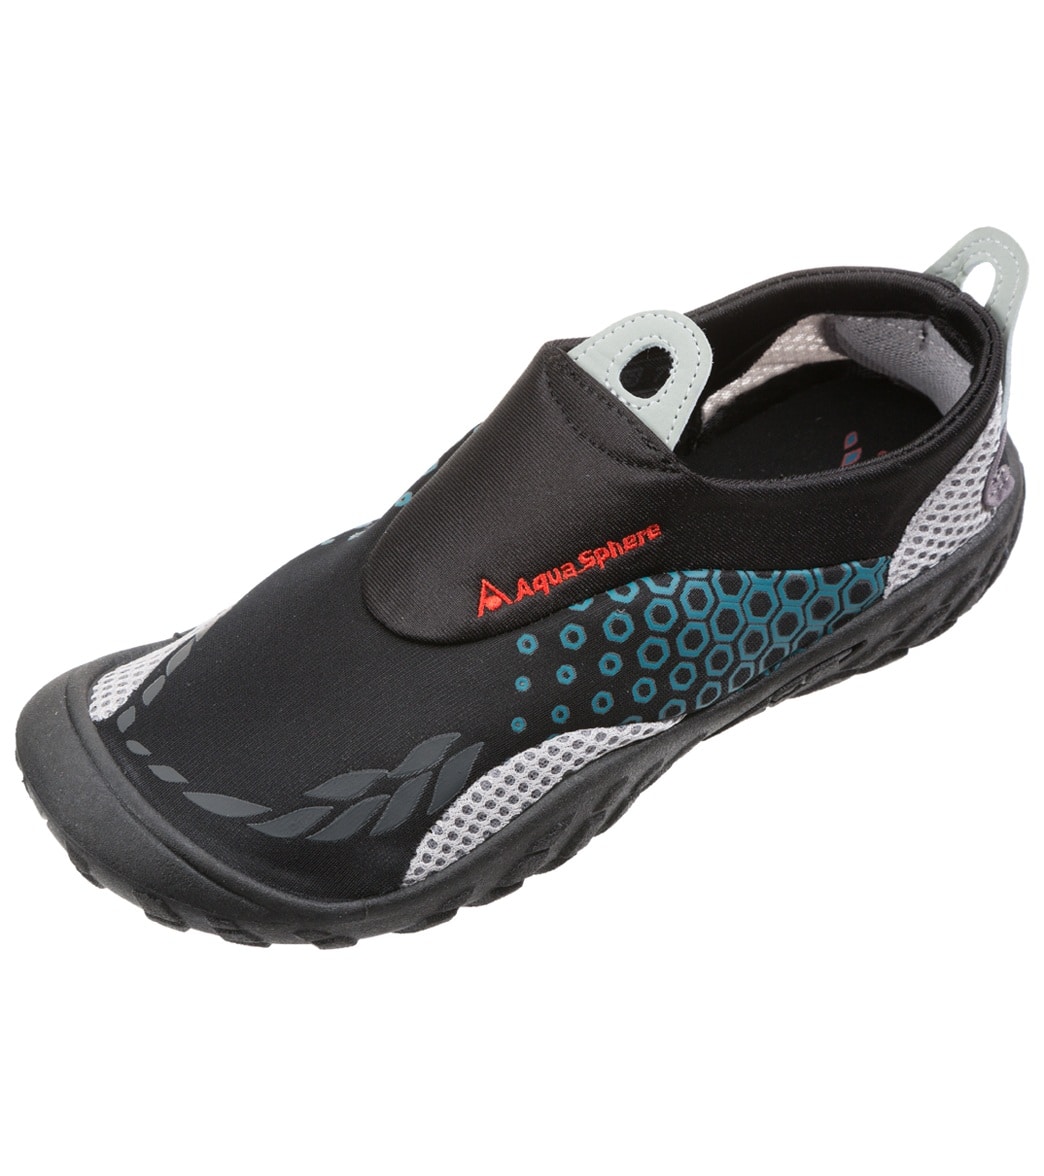 Aqua Sphere Sporter Water Shoe at SwimOutlet.com